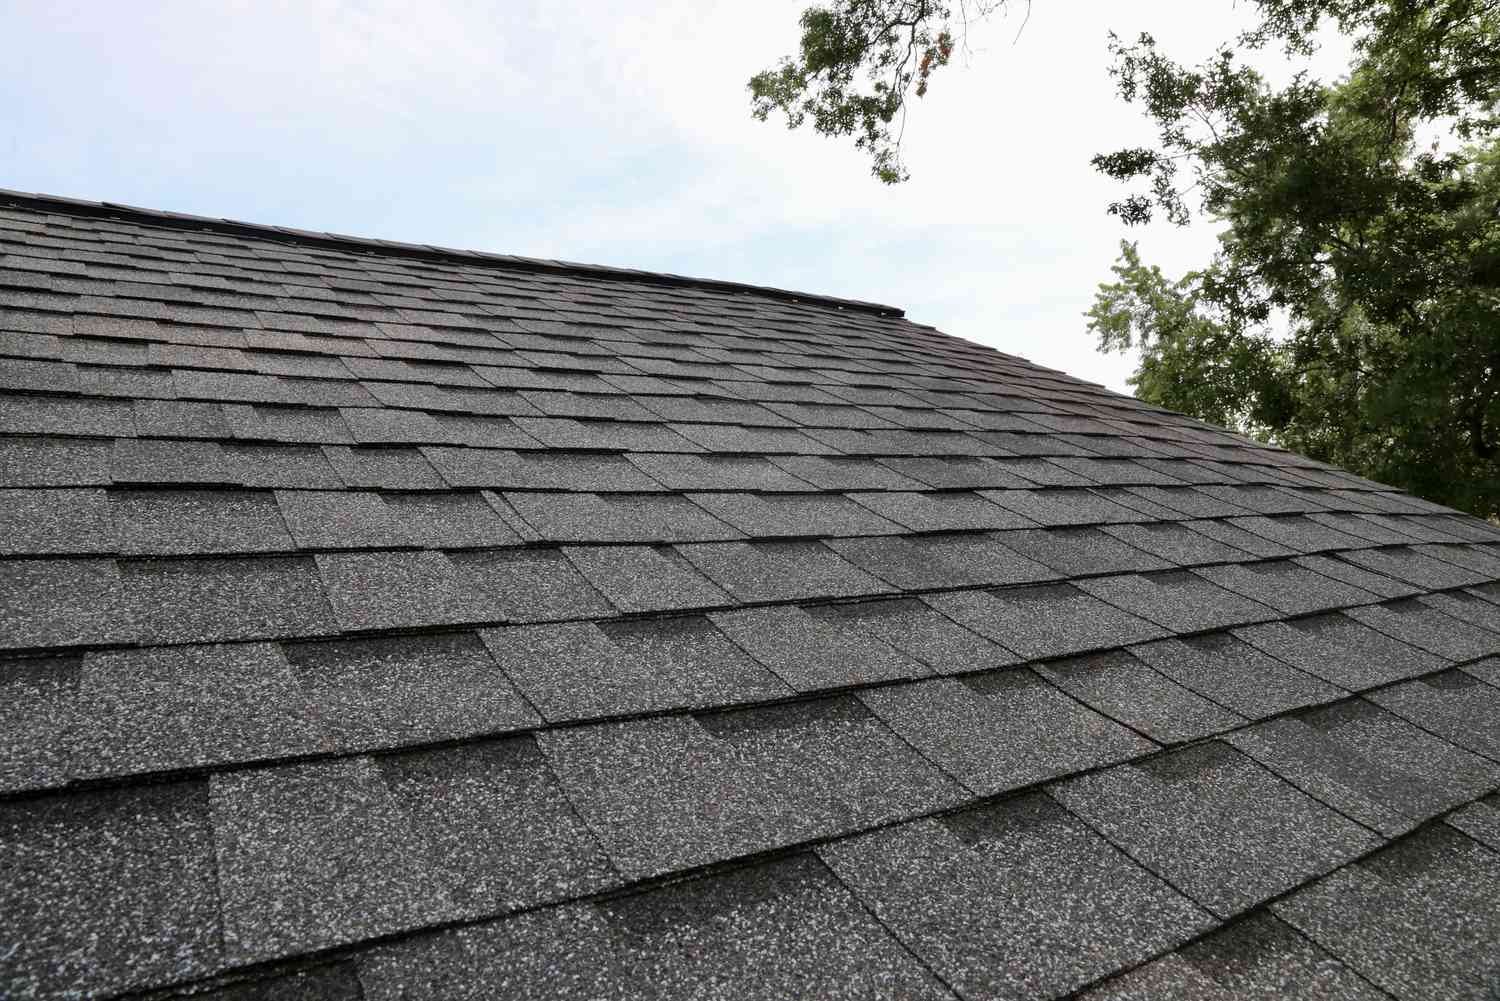 Clean shingle roof